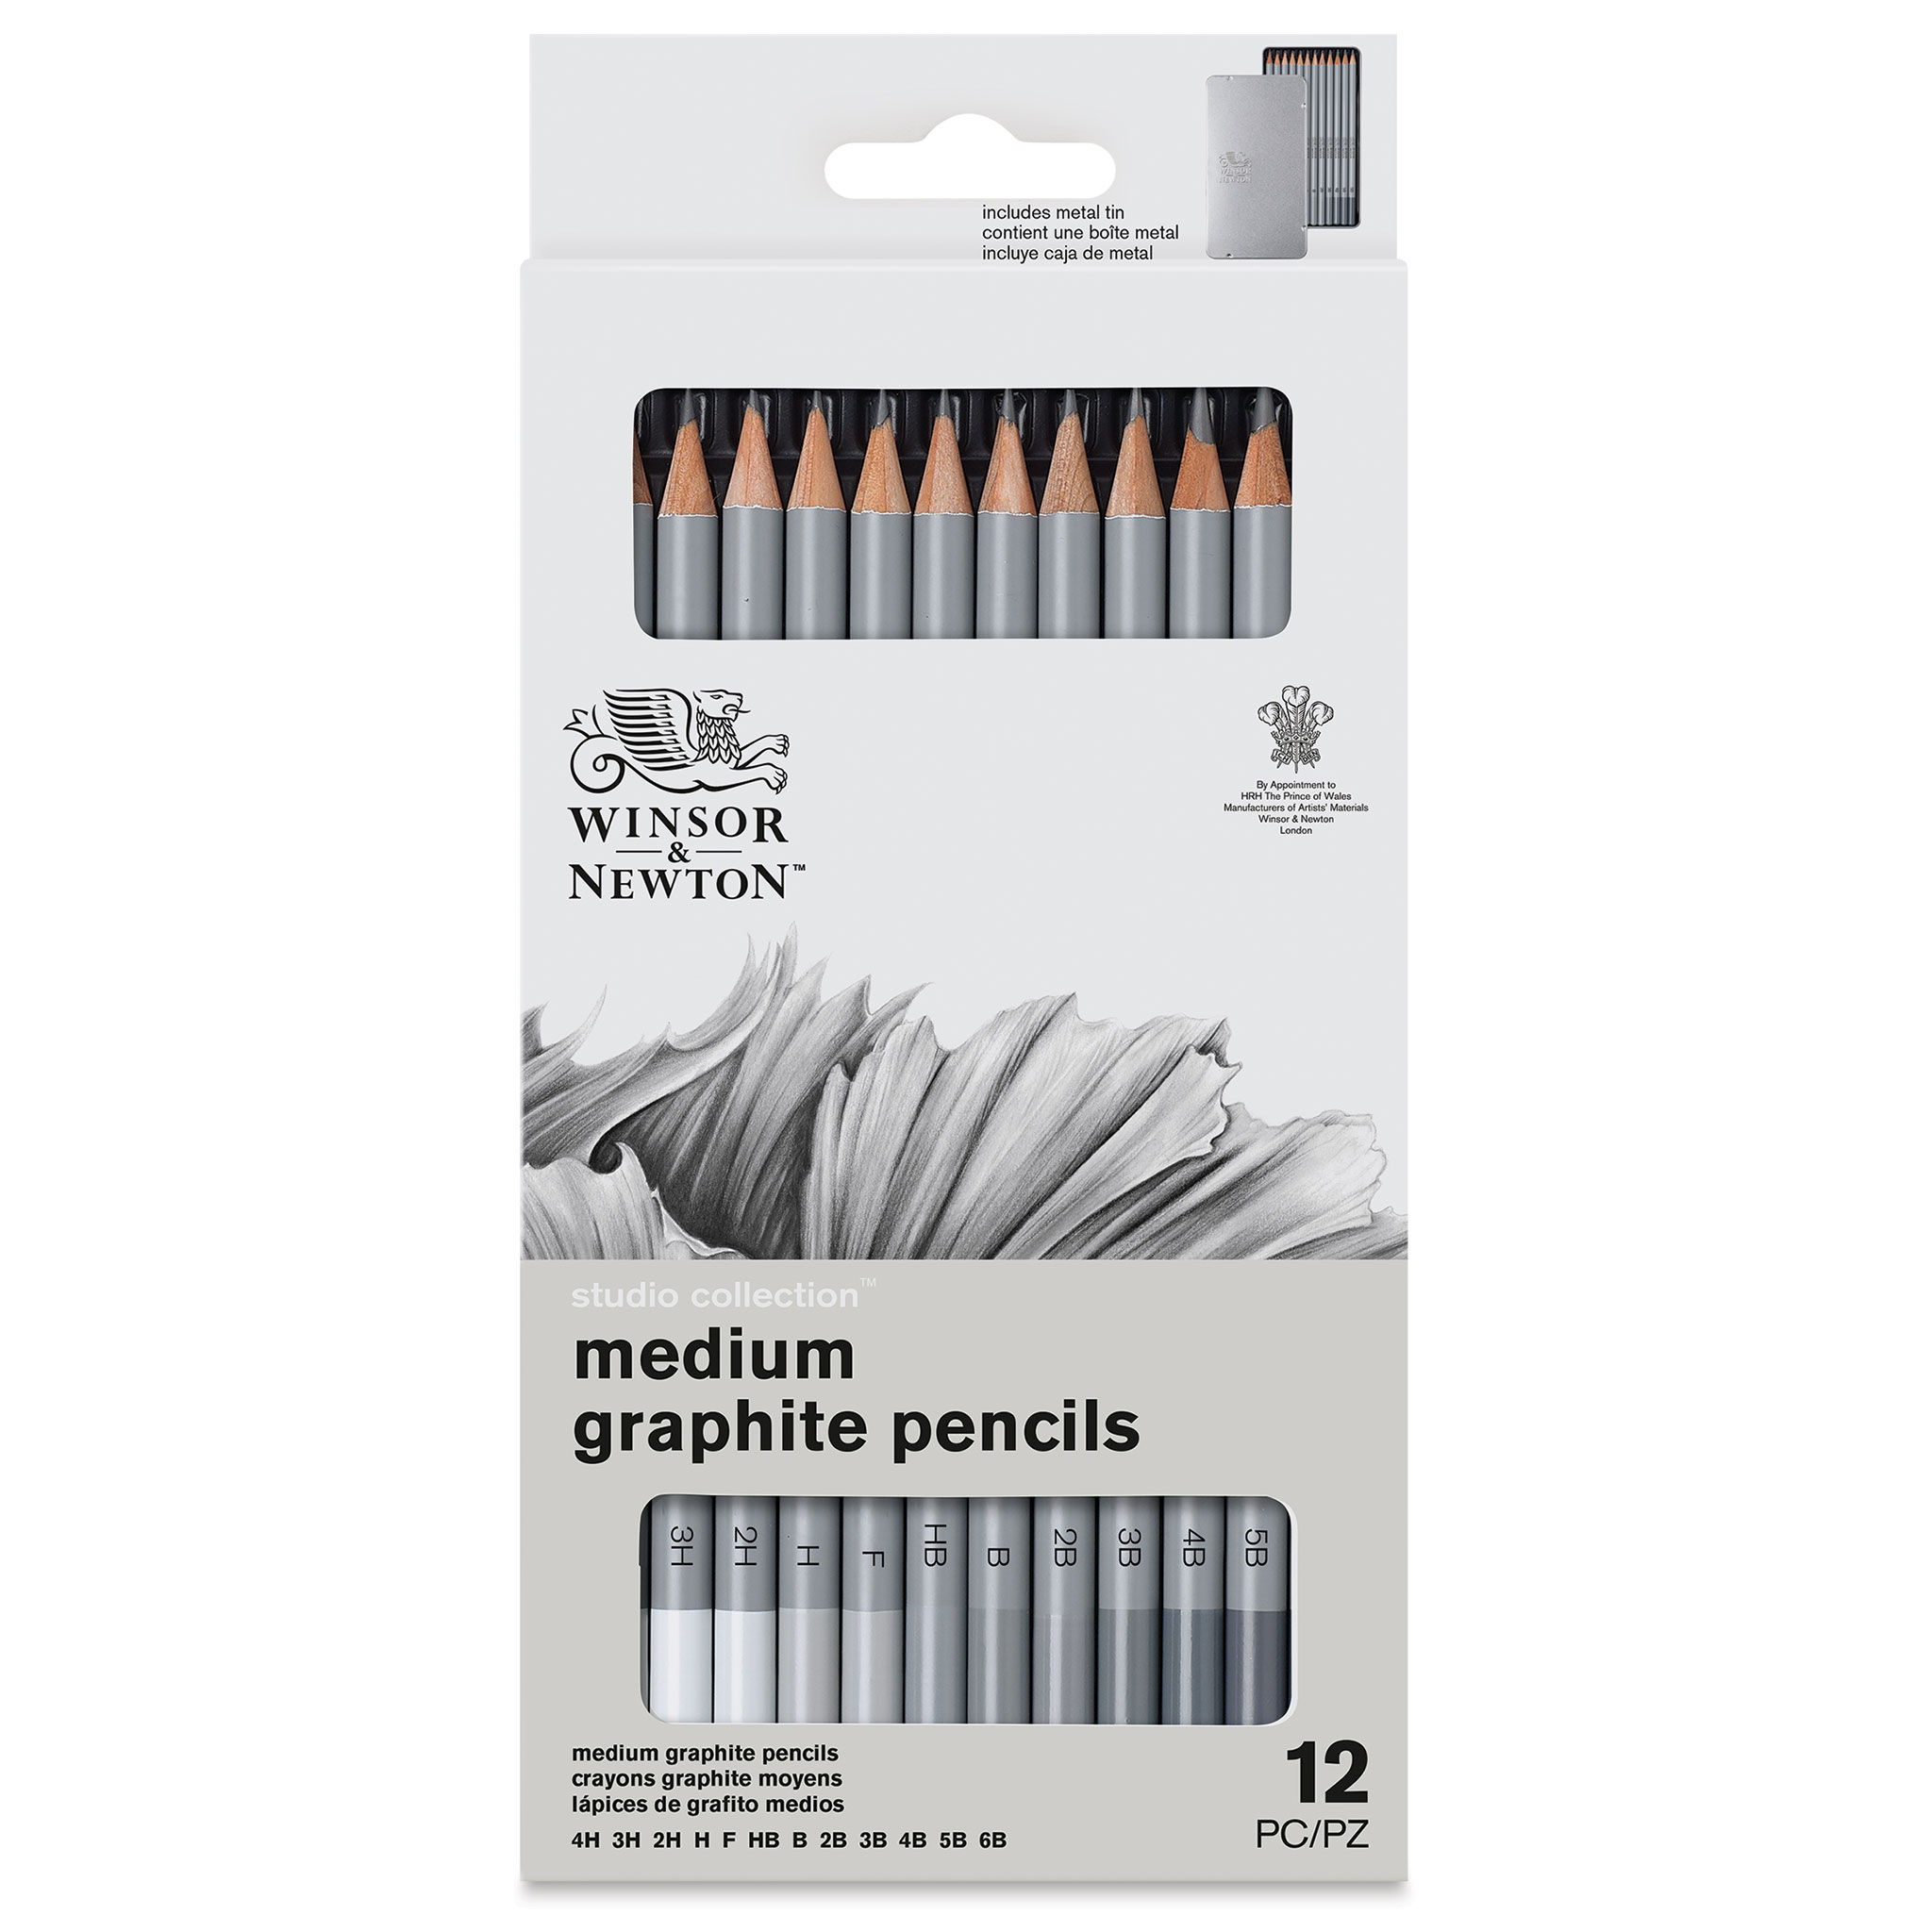 Winsor & Newton Studio Collection Sketching Pencil - Set of 6